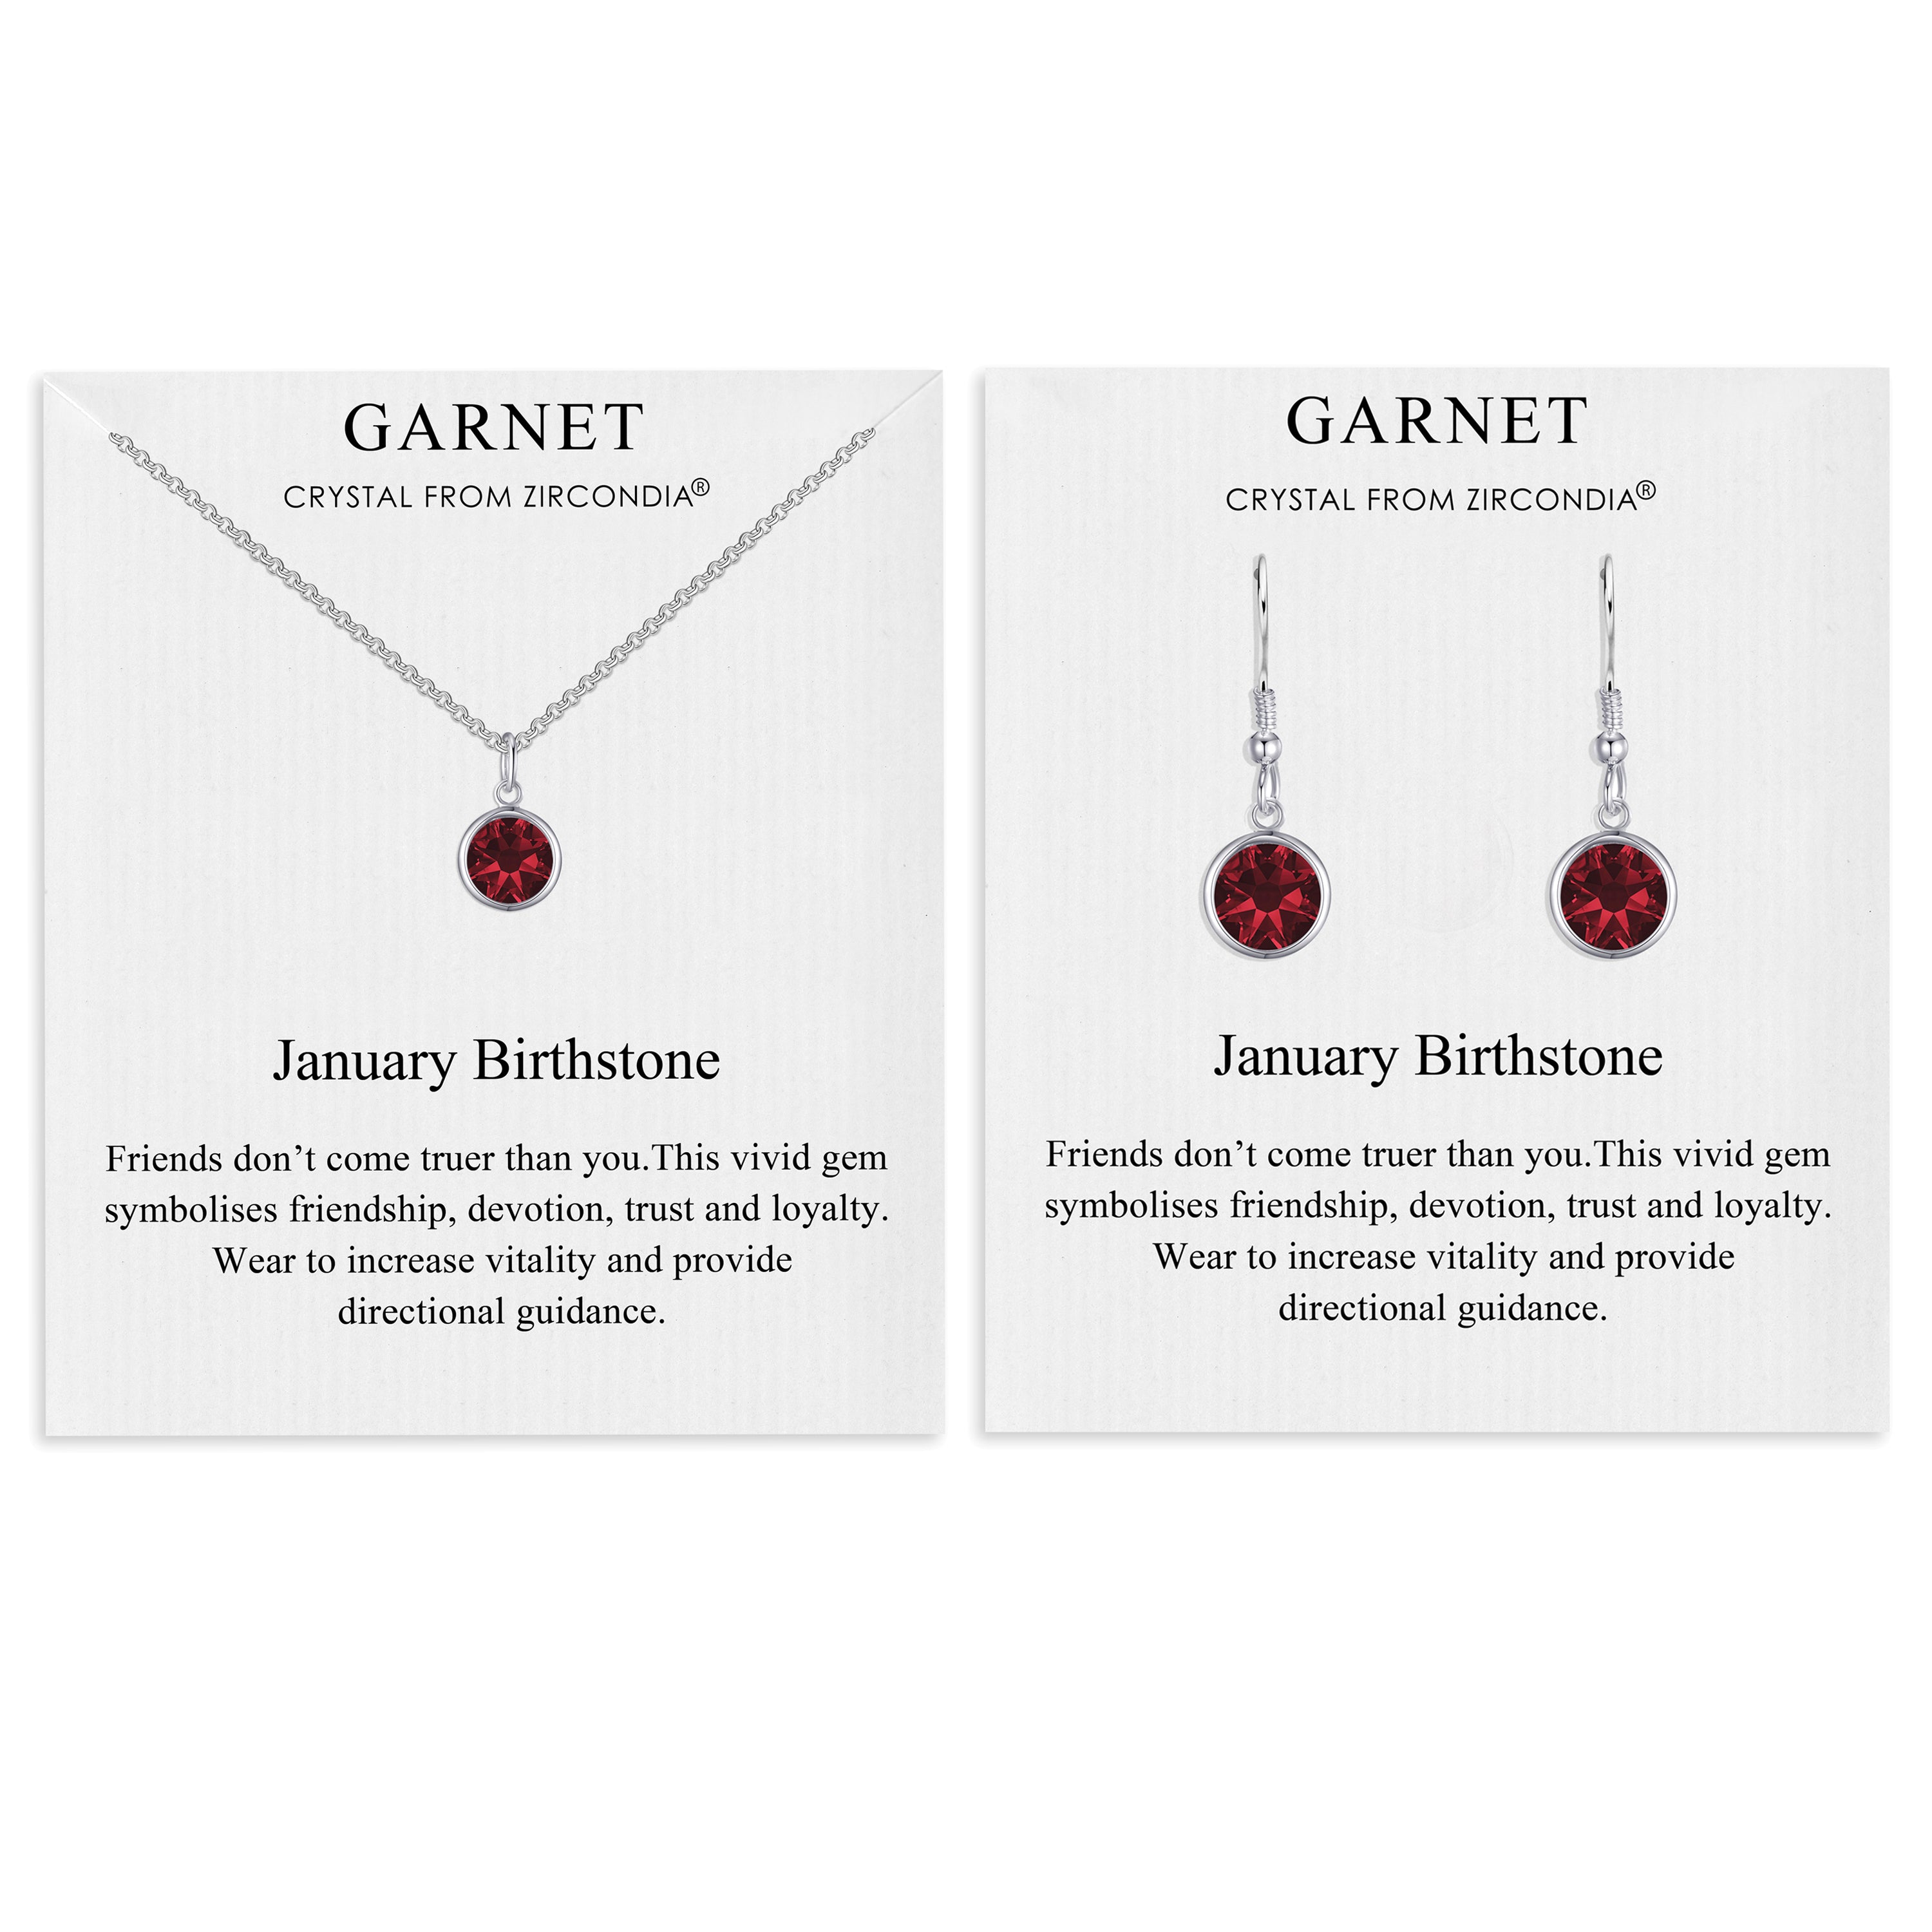 January (Garnet) Birthstone Necklace & Drop Earrings Set Created with Zircondia® Crystals by Philip Jones Jewellery